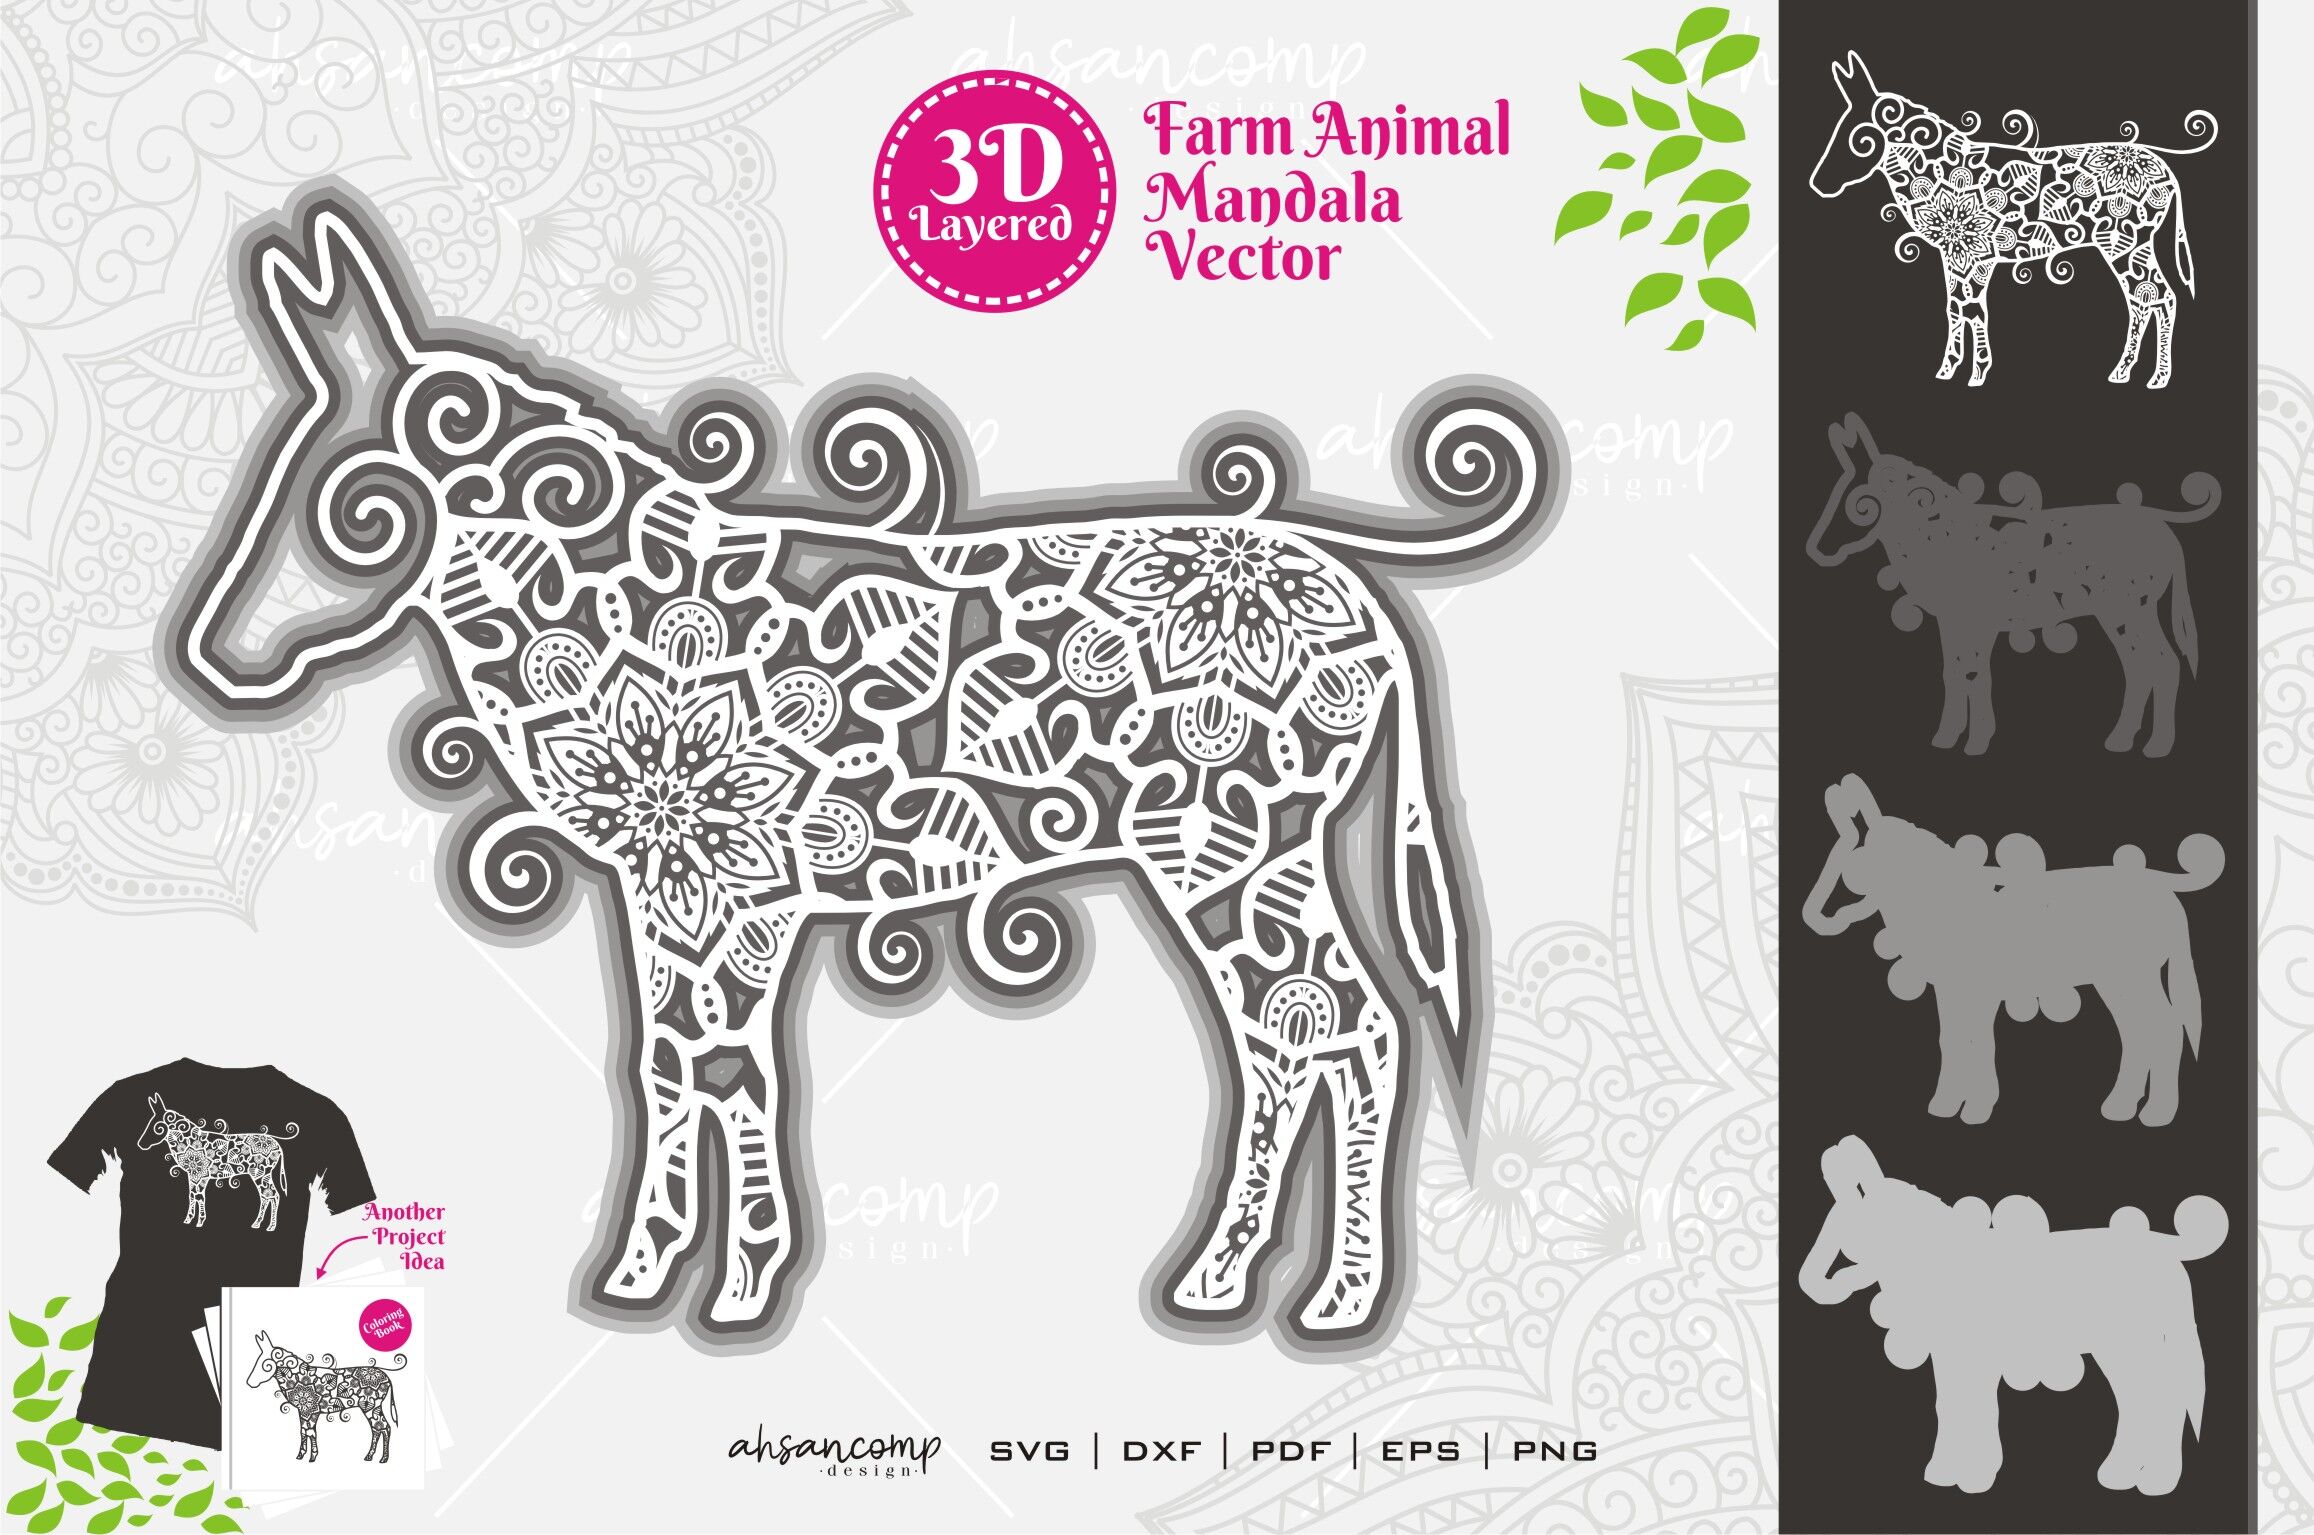 Download Farm Animal Mandala Svg 3d Layered 4 By Ahsancomp Studio Thehungryjpeg Com